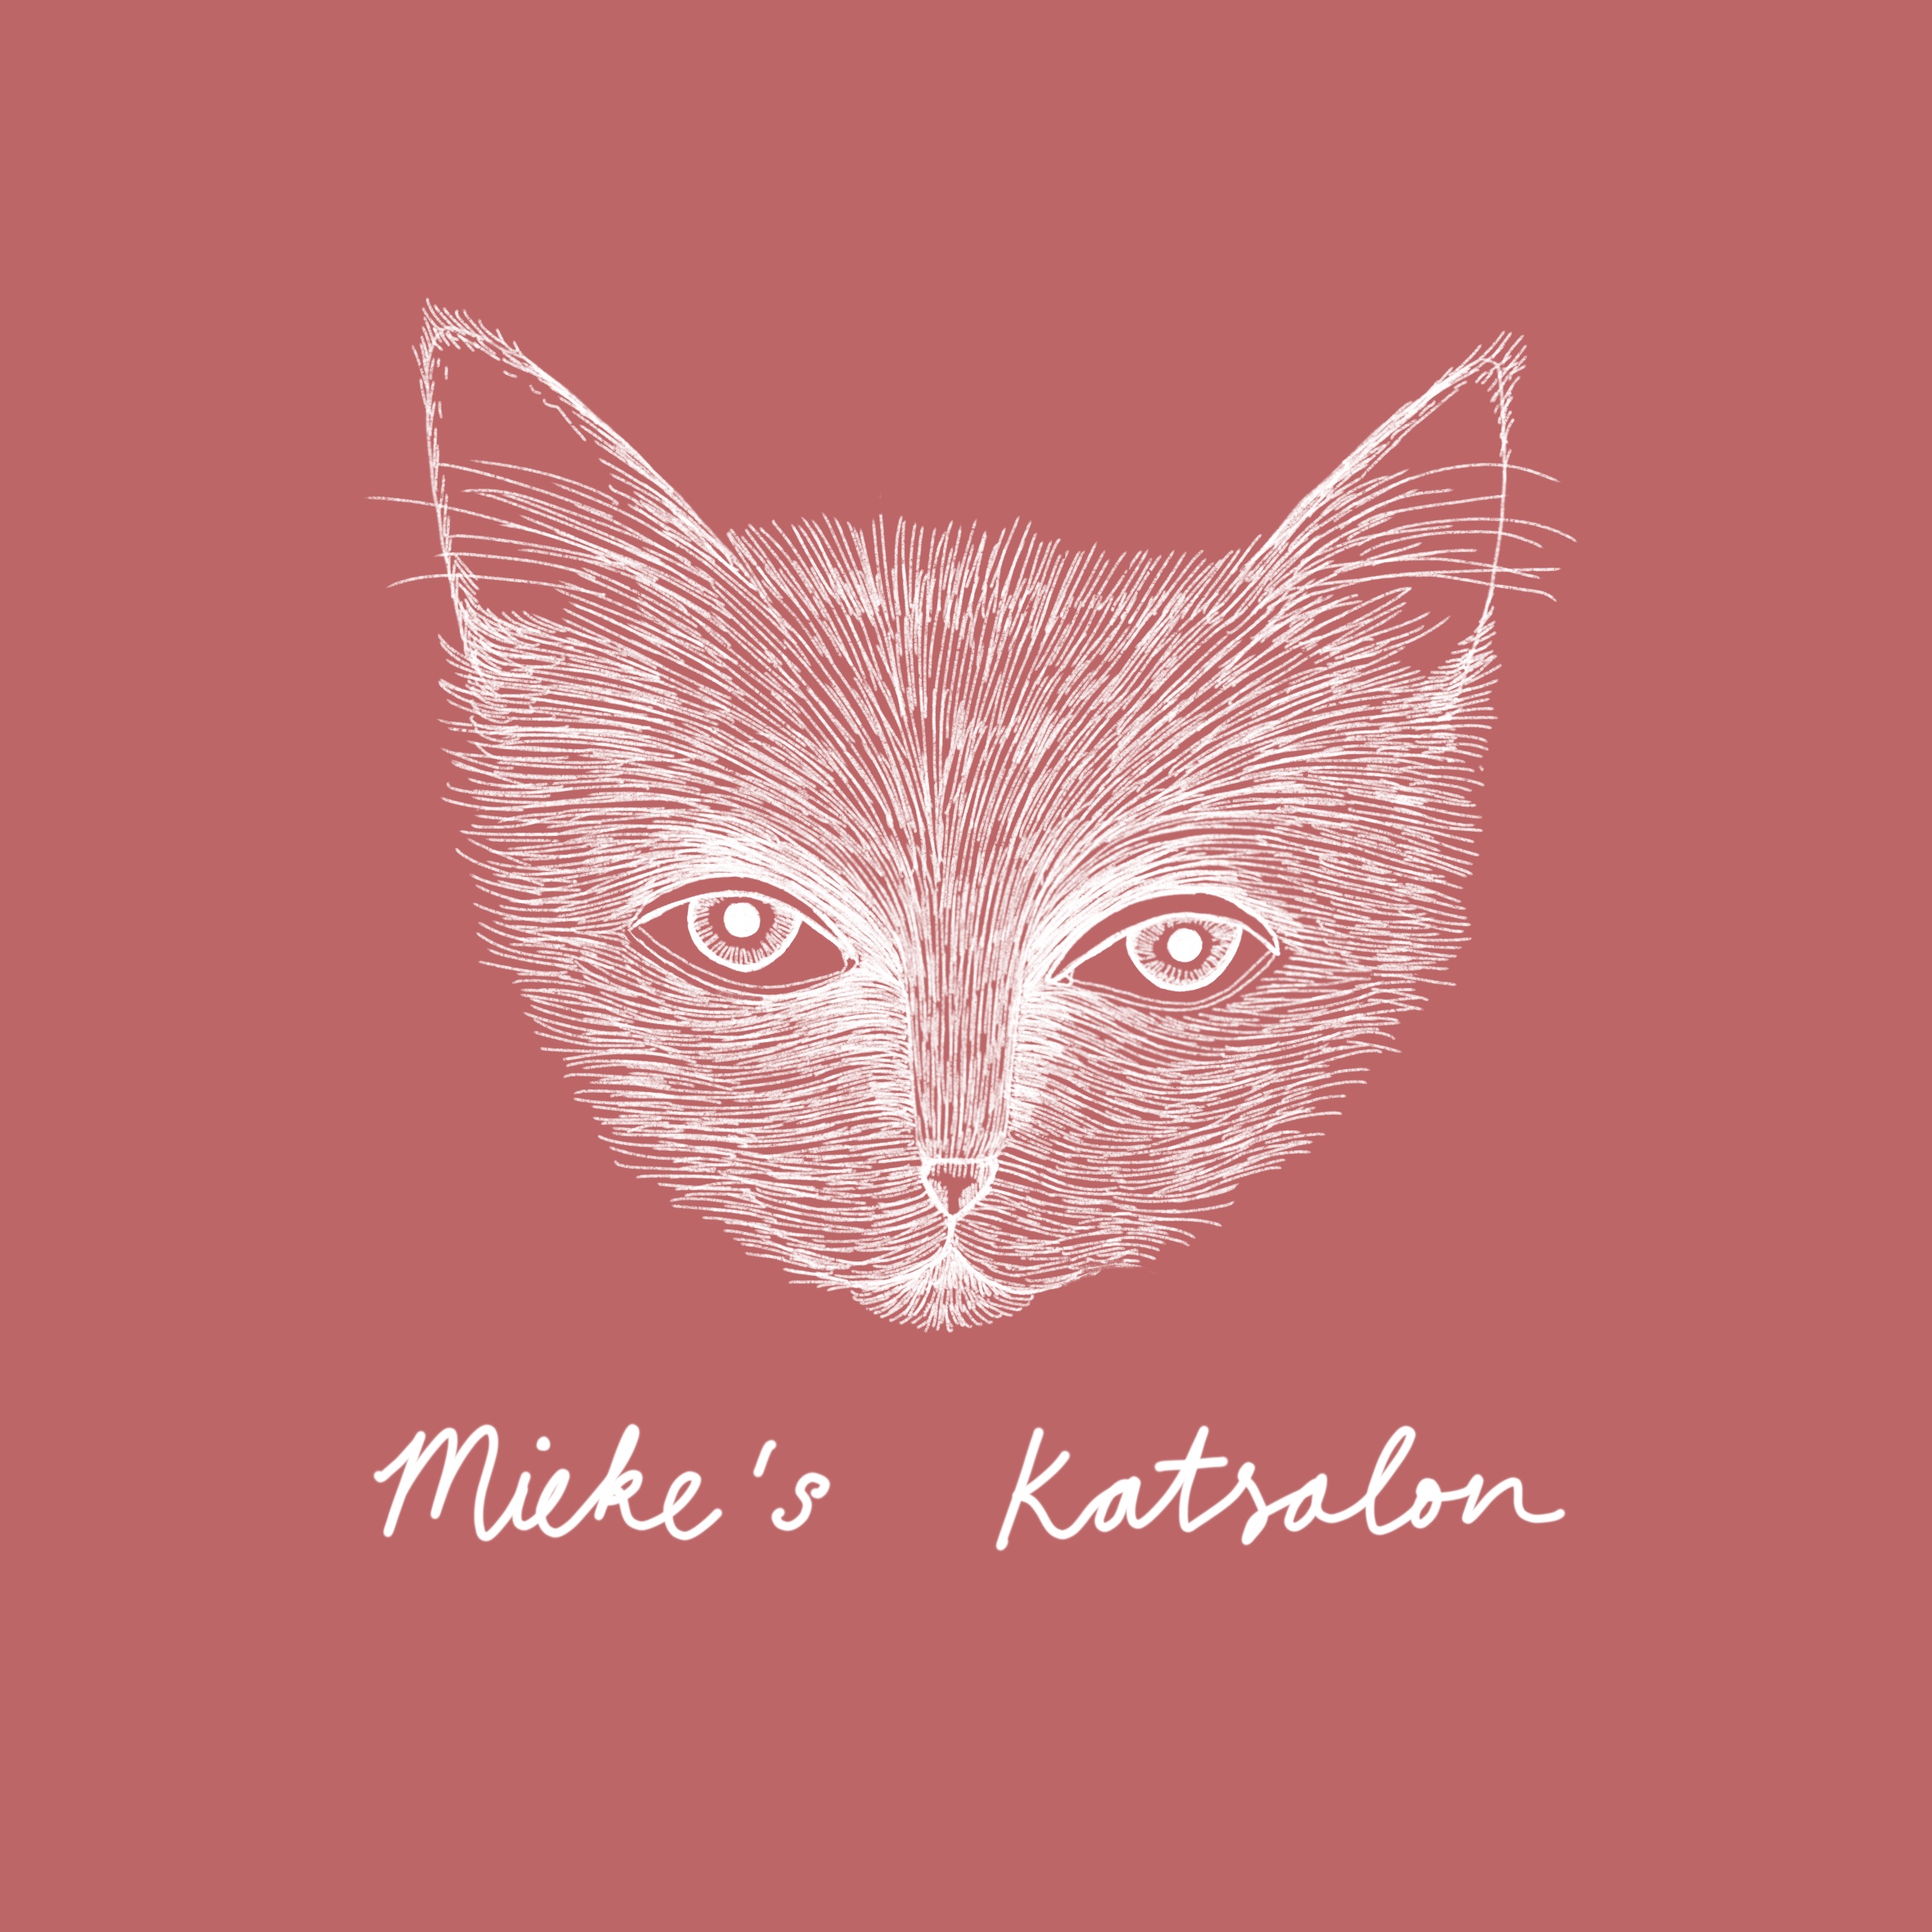 Mieke's Katsolon